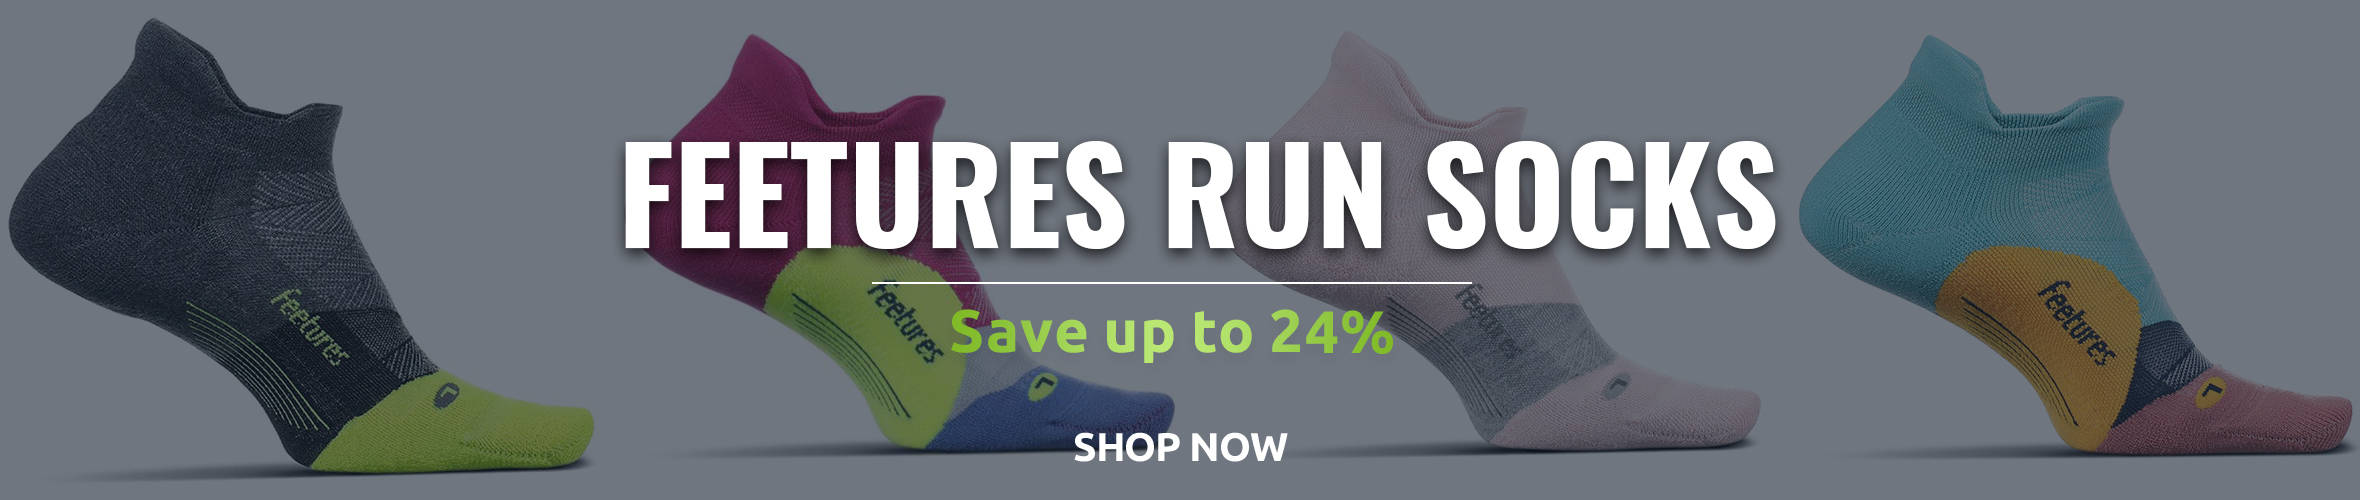 Feetures Run Socks - Save up to 24%